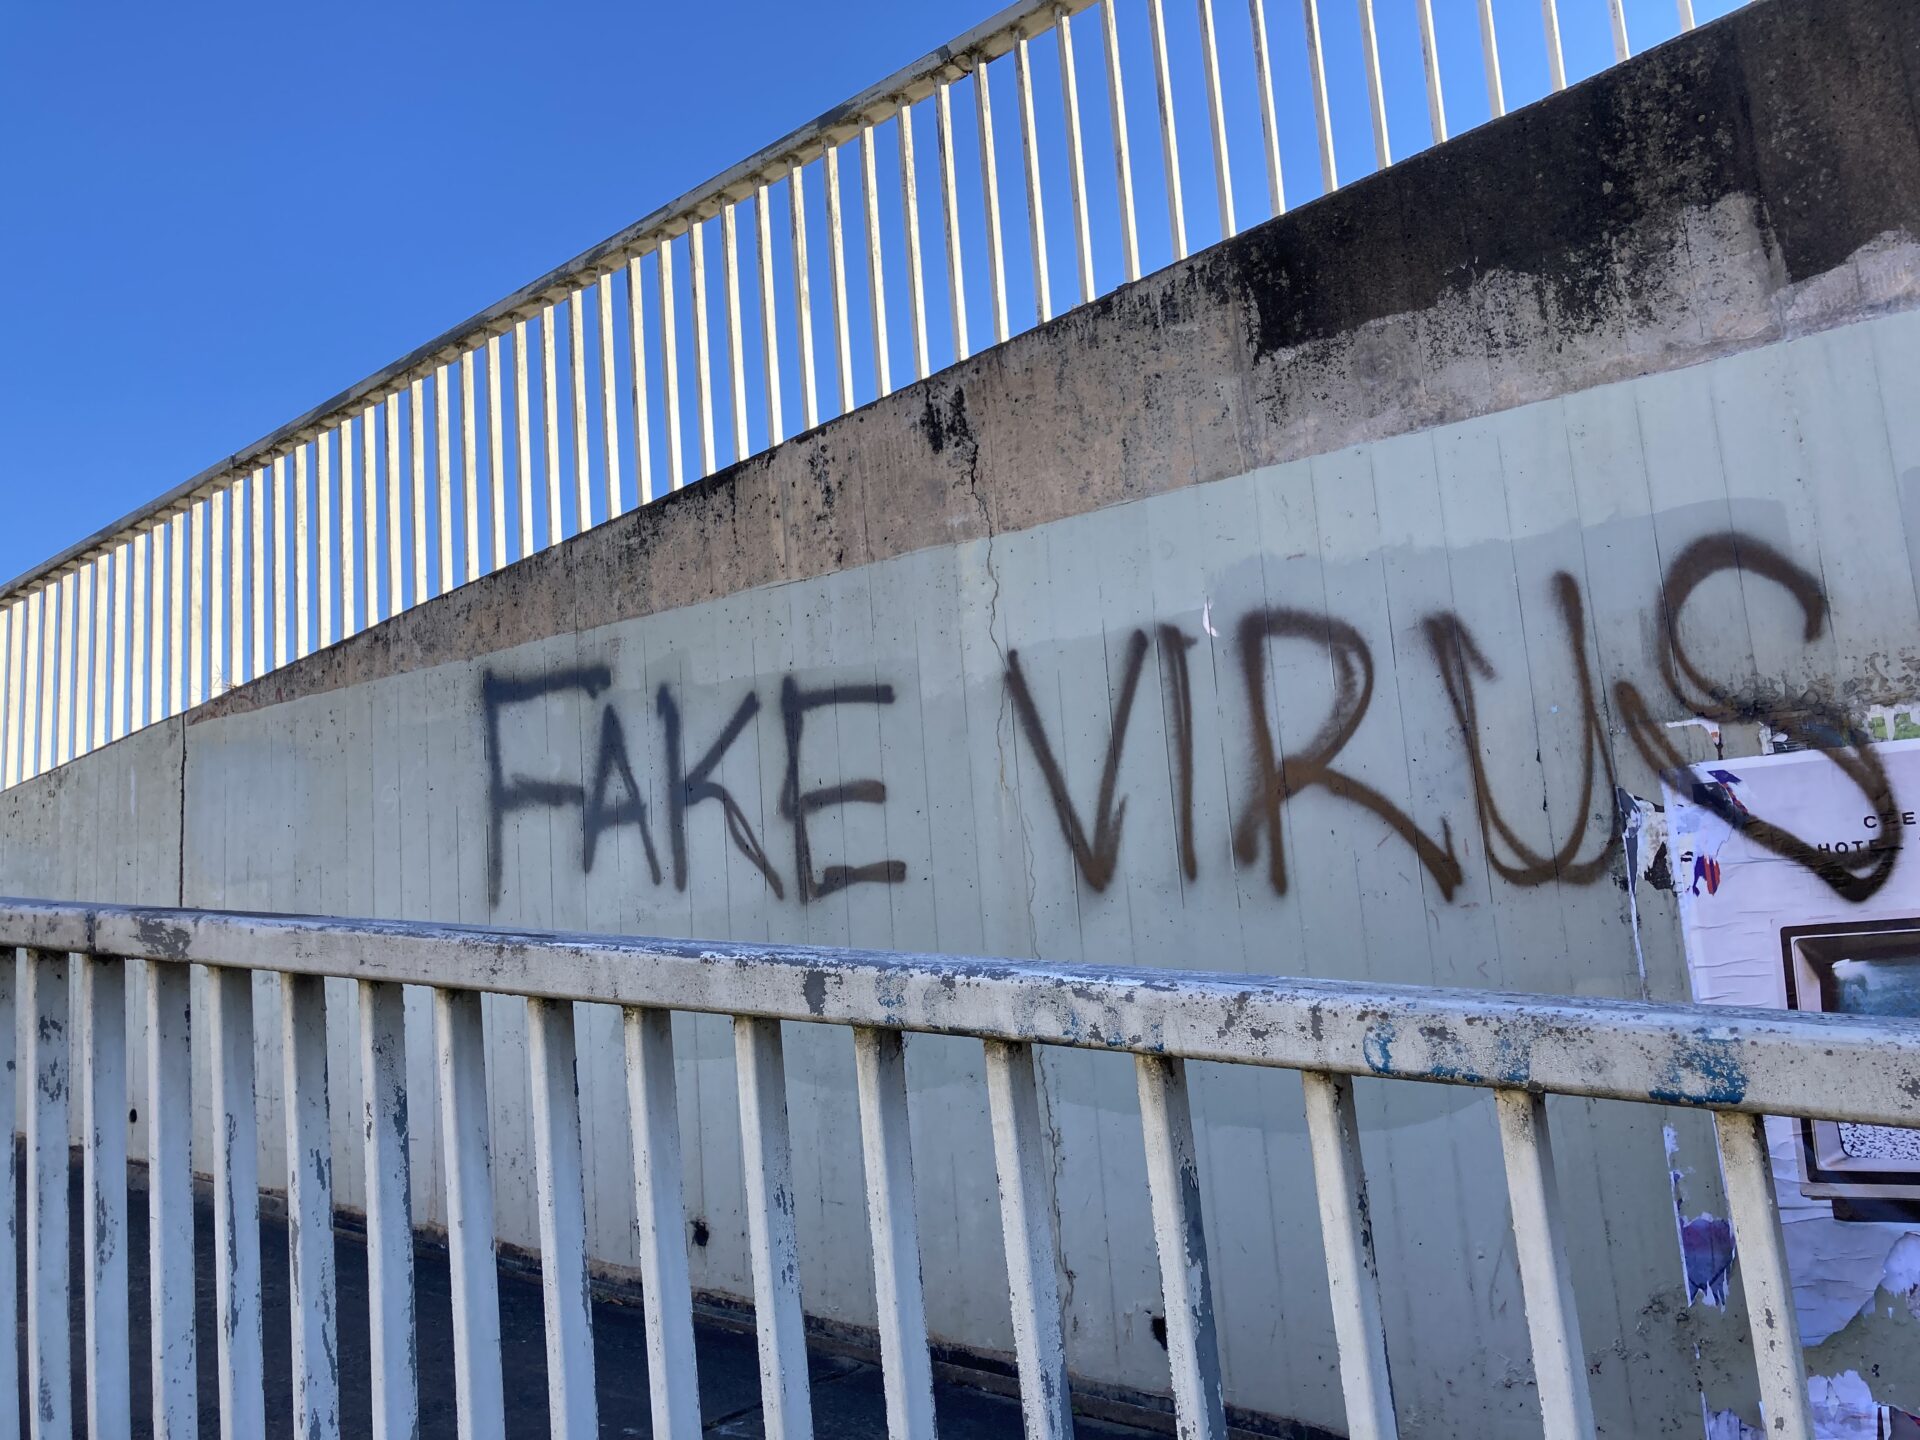 graffiti on the side of a bridge that says 'fake virus'